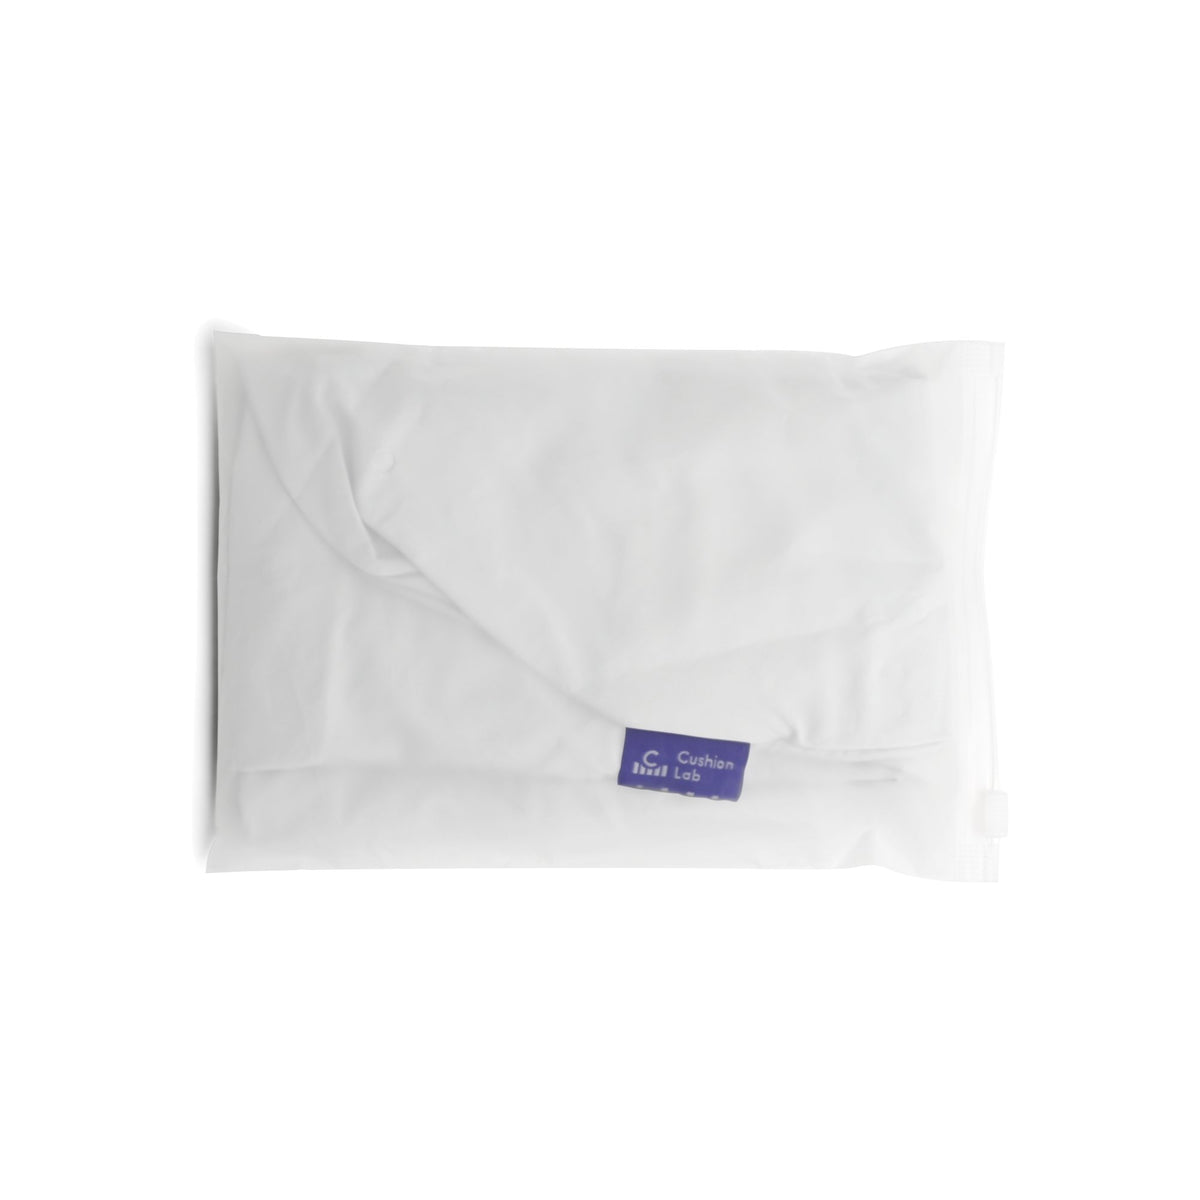 Cushion Lab Deep Sleep Pillow FreshFace Pillow Cover 005